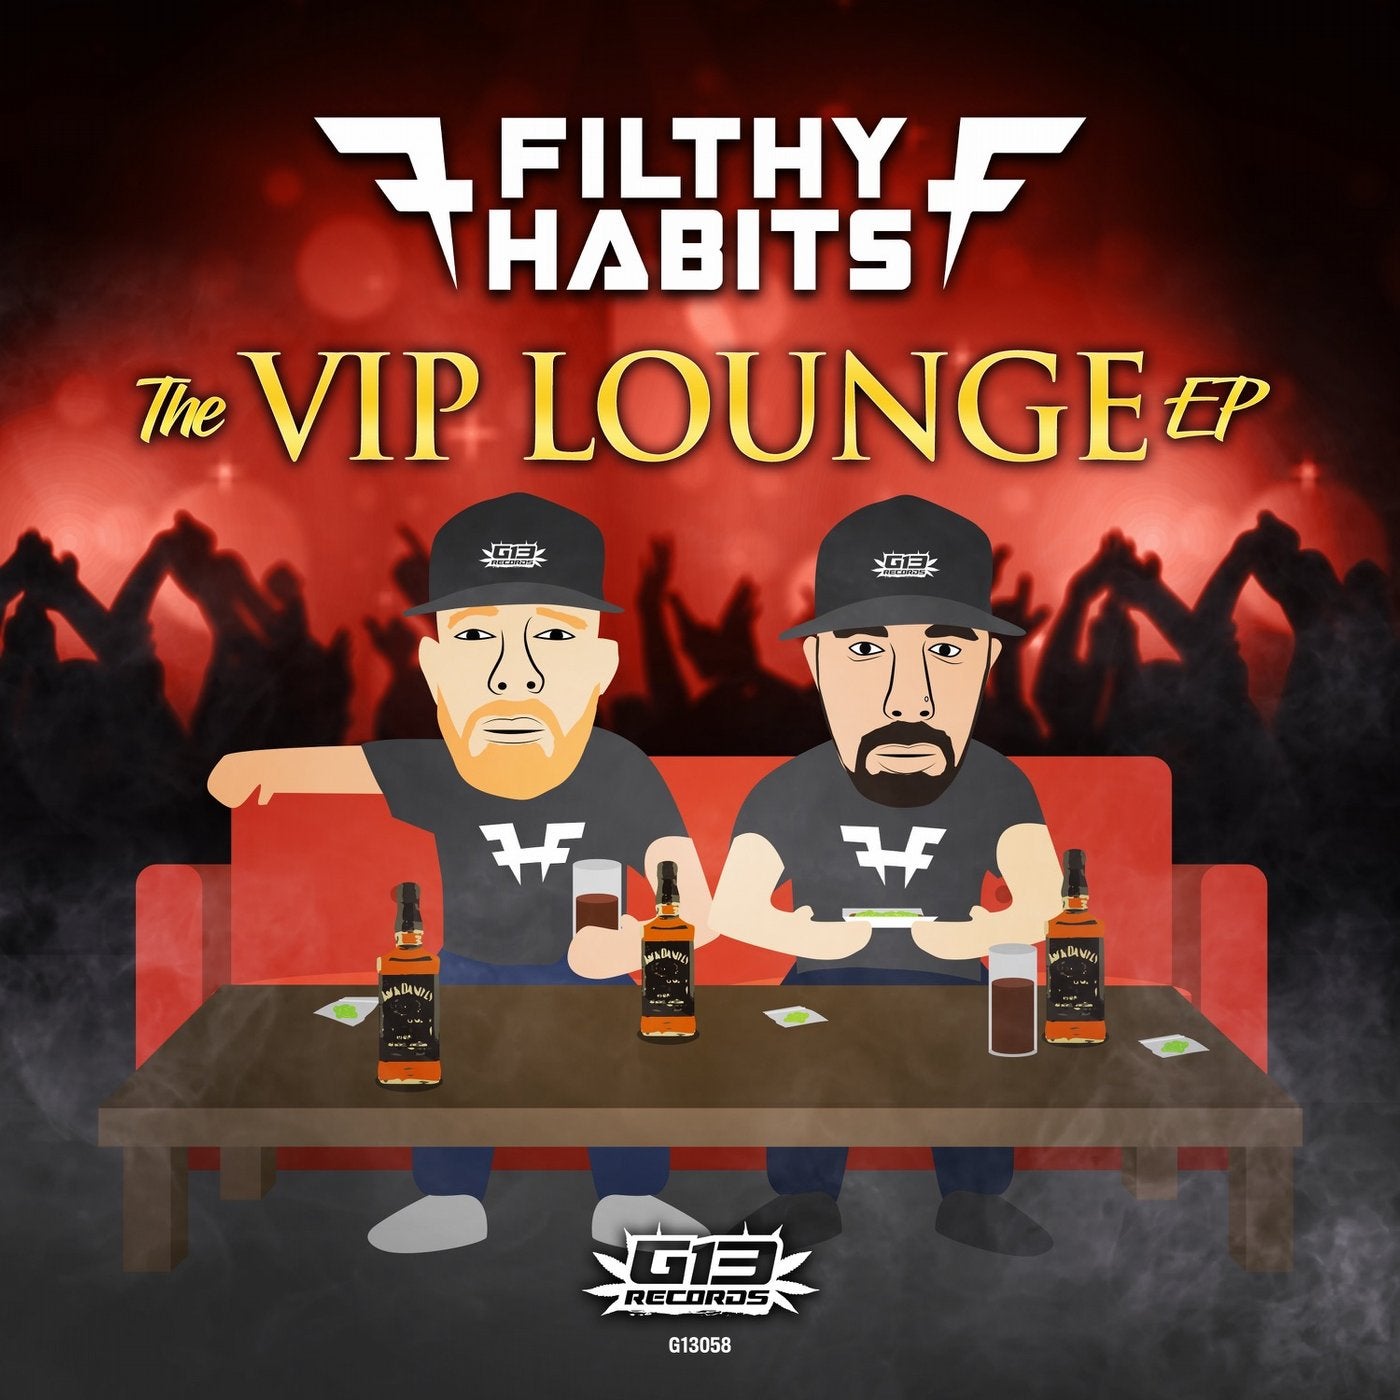 The VIP Lounge EP